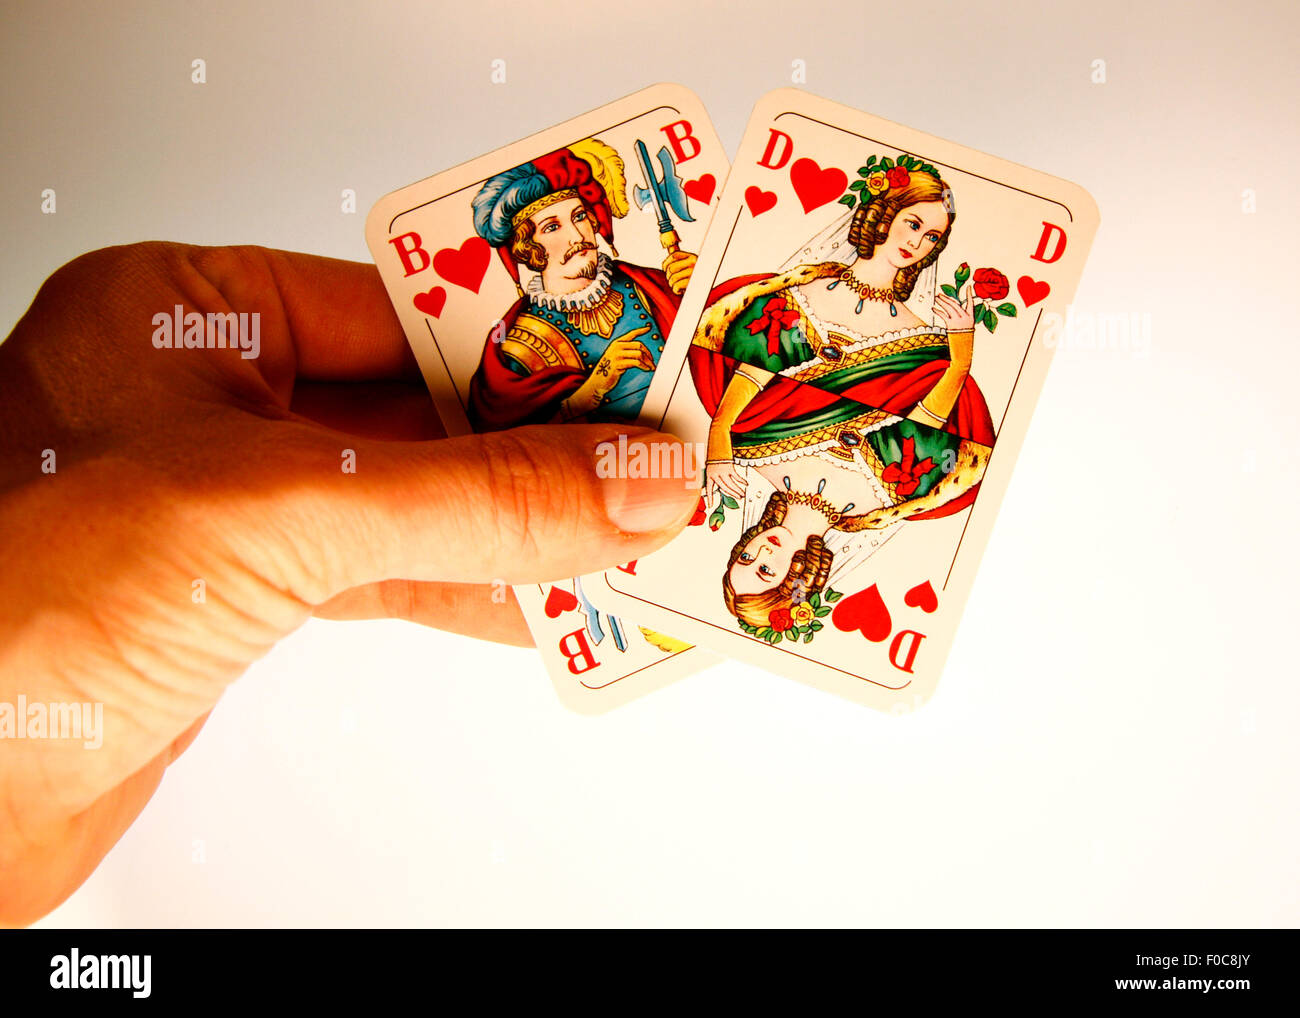 Herz Bube und Herz Dame - Symbolbild Kartenspiel/ jeu de cartes. Banque D'Images